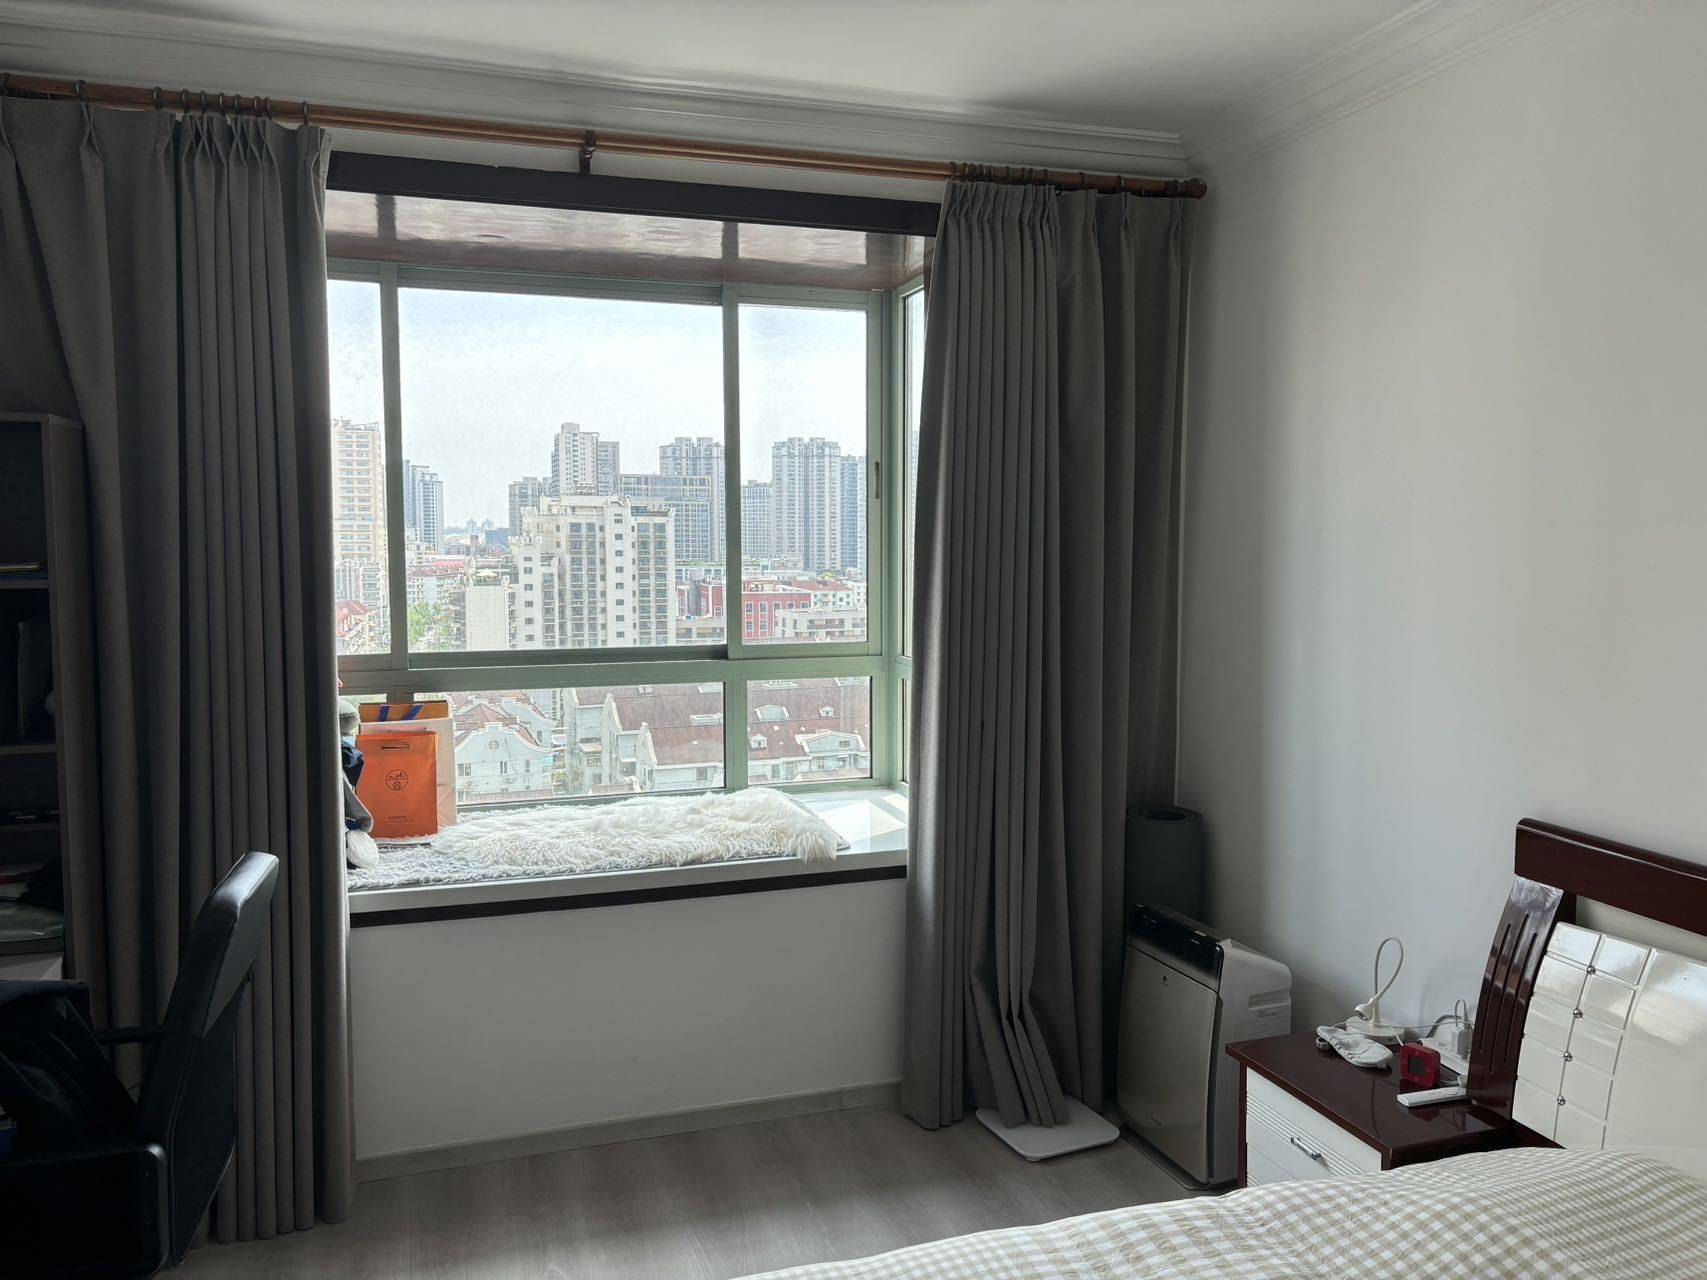 Shanghai-Huangpu-Cozy Home,Clean&Comfy,“Friends”,Chilled,LGBTQ Friendly